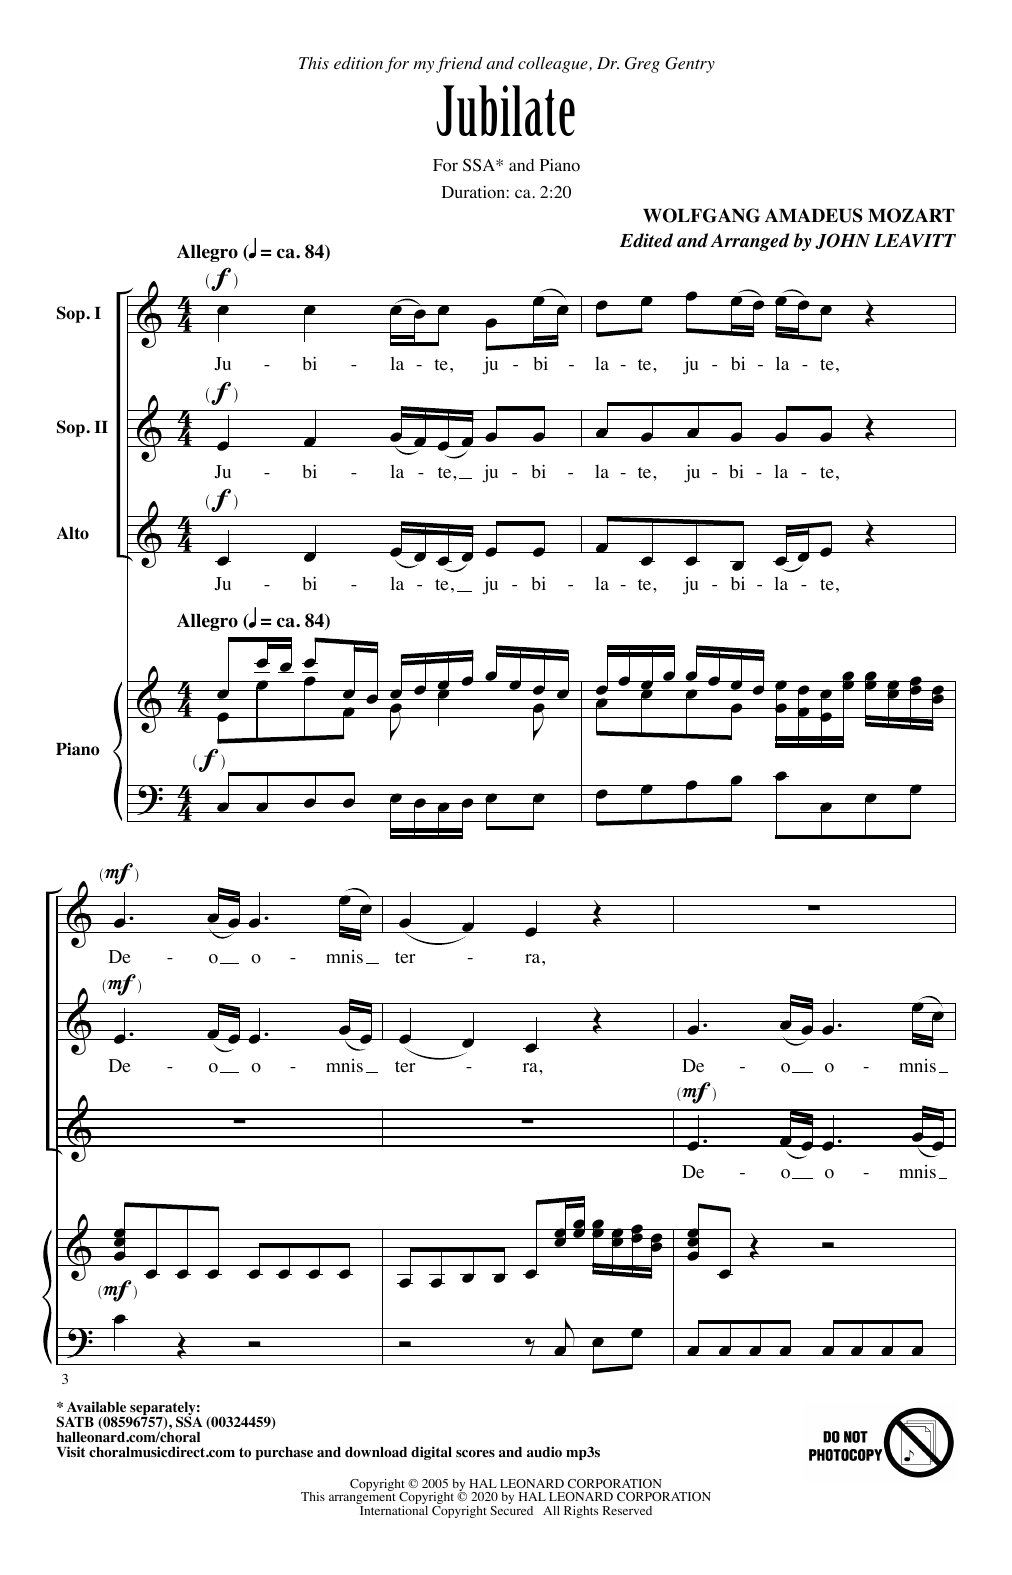 Wolfgang Amadeus Mozart Jubilate (arr. John Leavitt) Sheet Music Notes & Chords for SSA Choir - Download or Print PDF